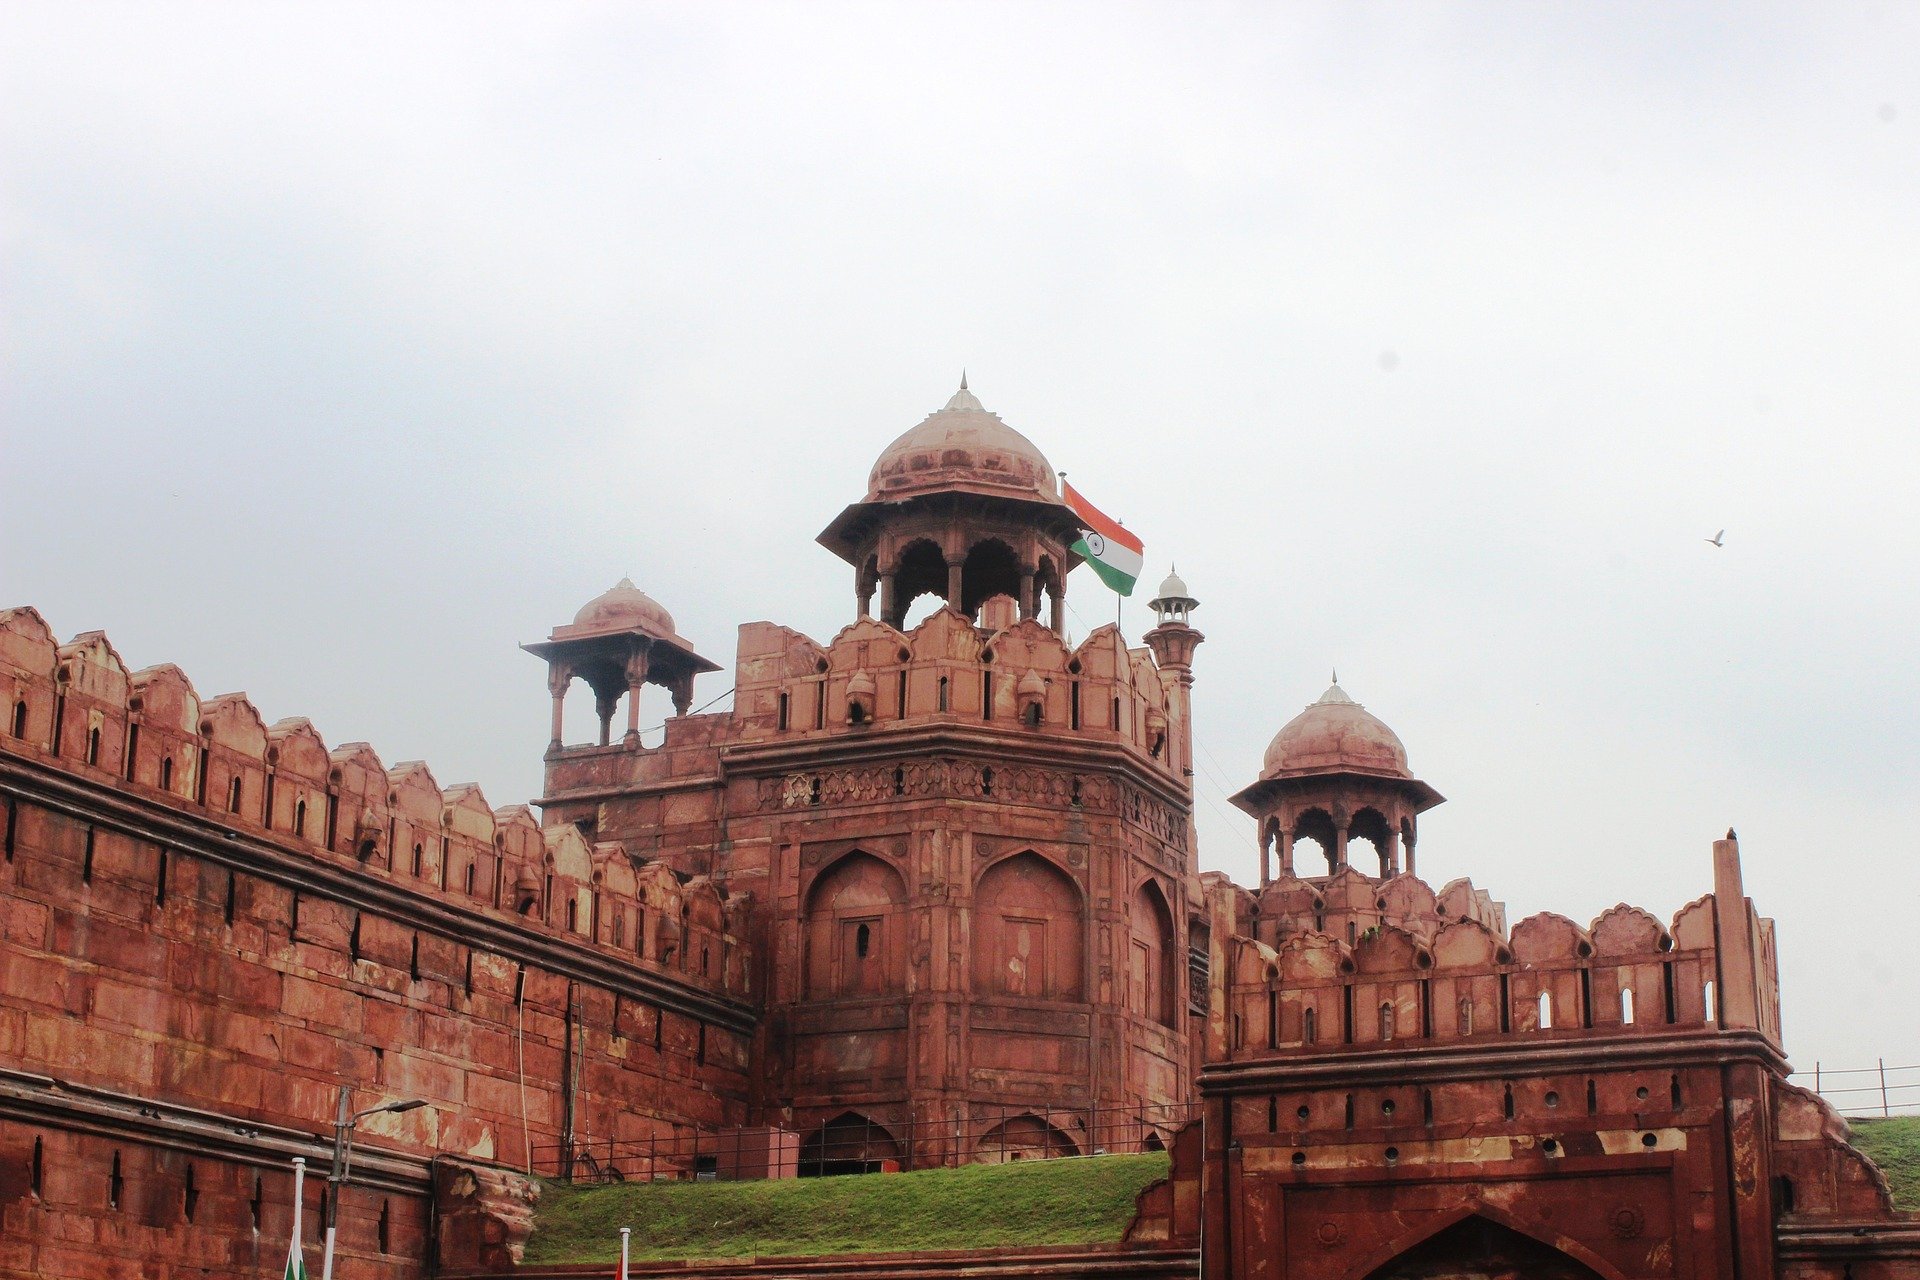 Arquitectura del Fuerte Rojo en Delhi, viaje a la India